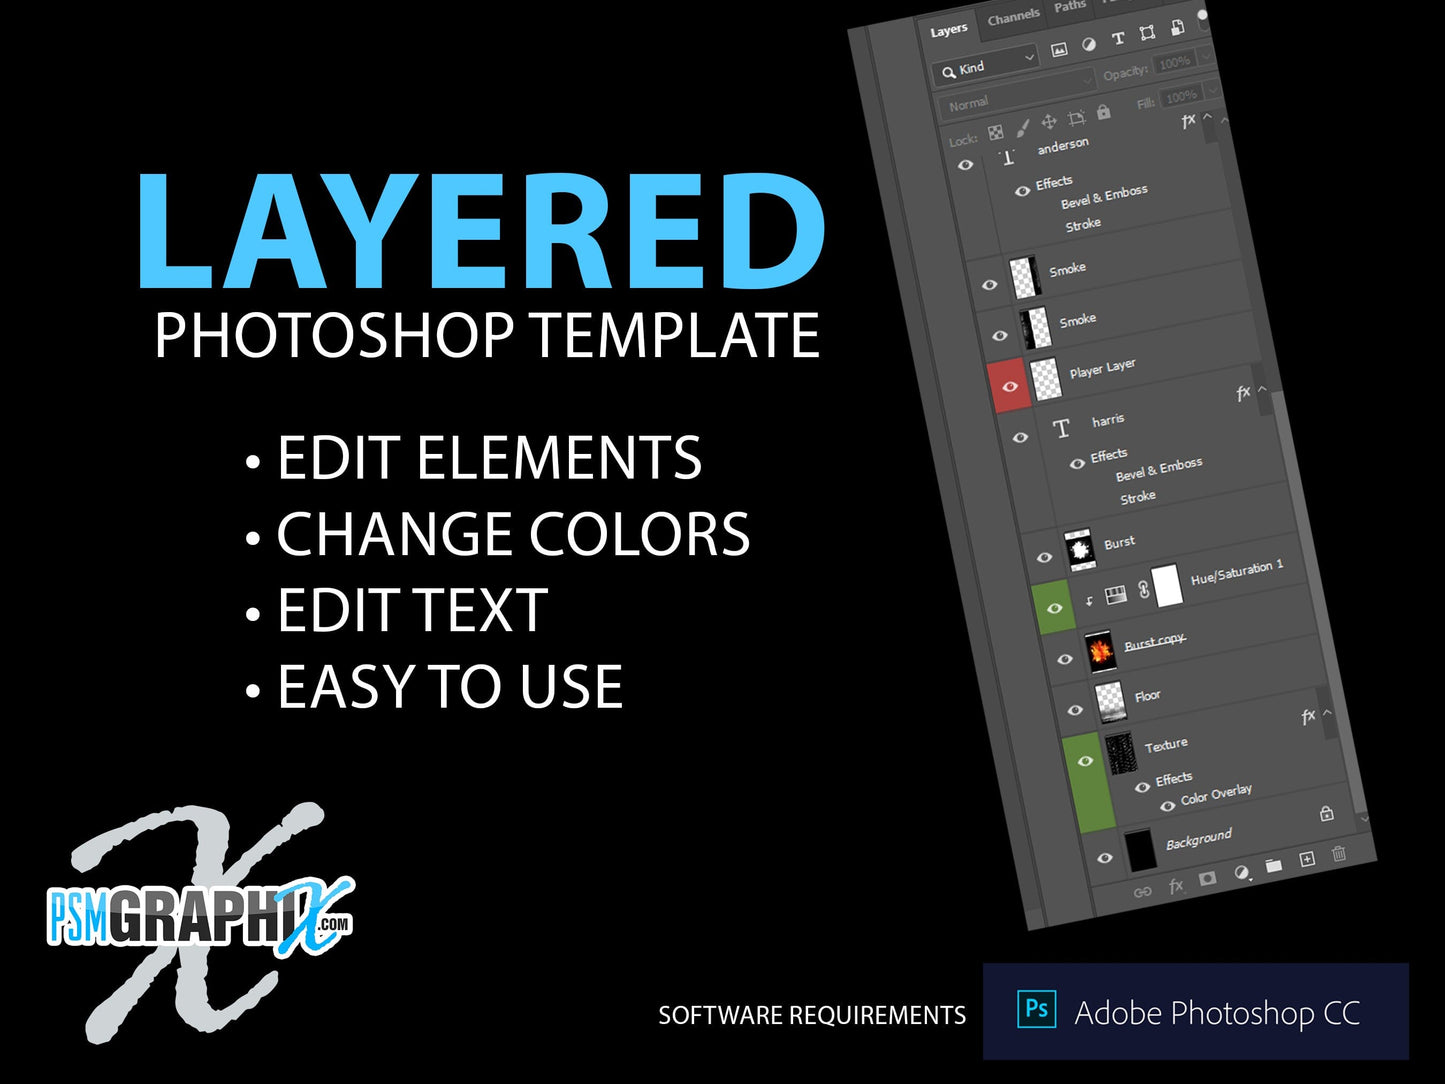 Neon Bricks - Stage Series II - Vertical Photoshop Template-Photoshop Template - PSMGraphix